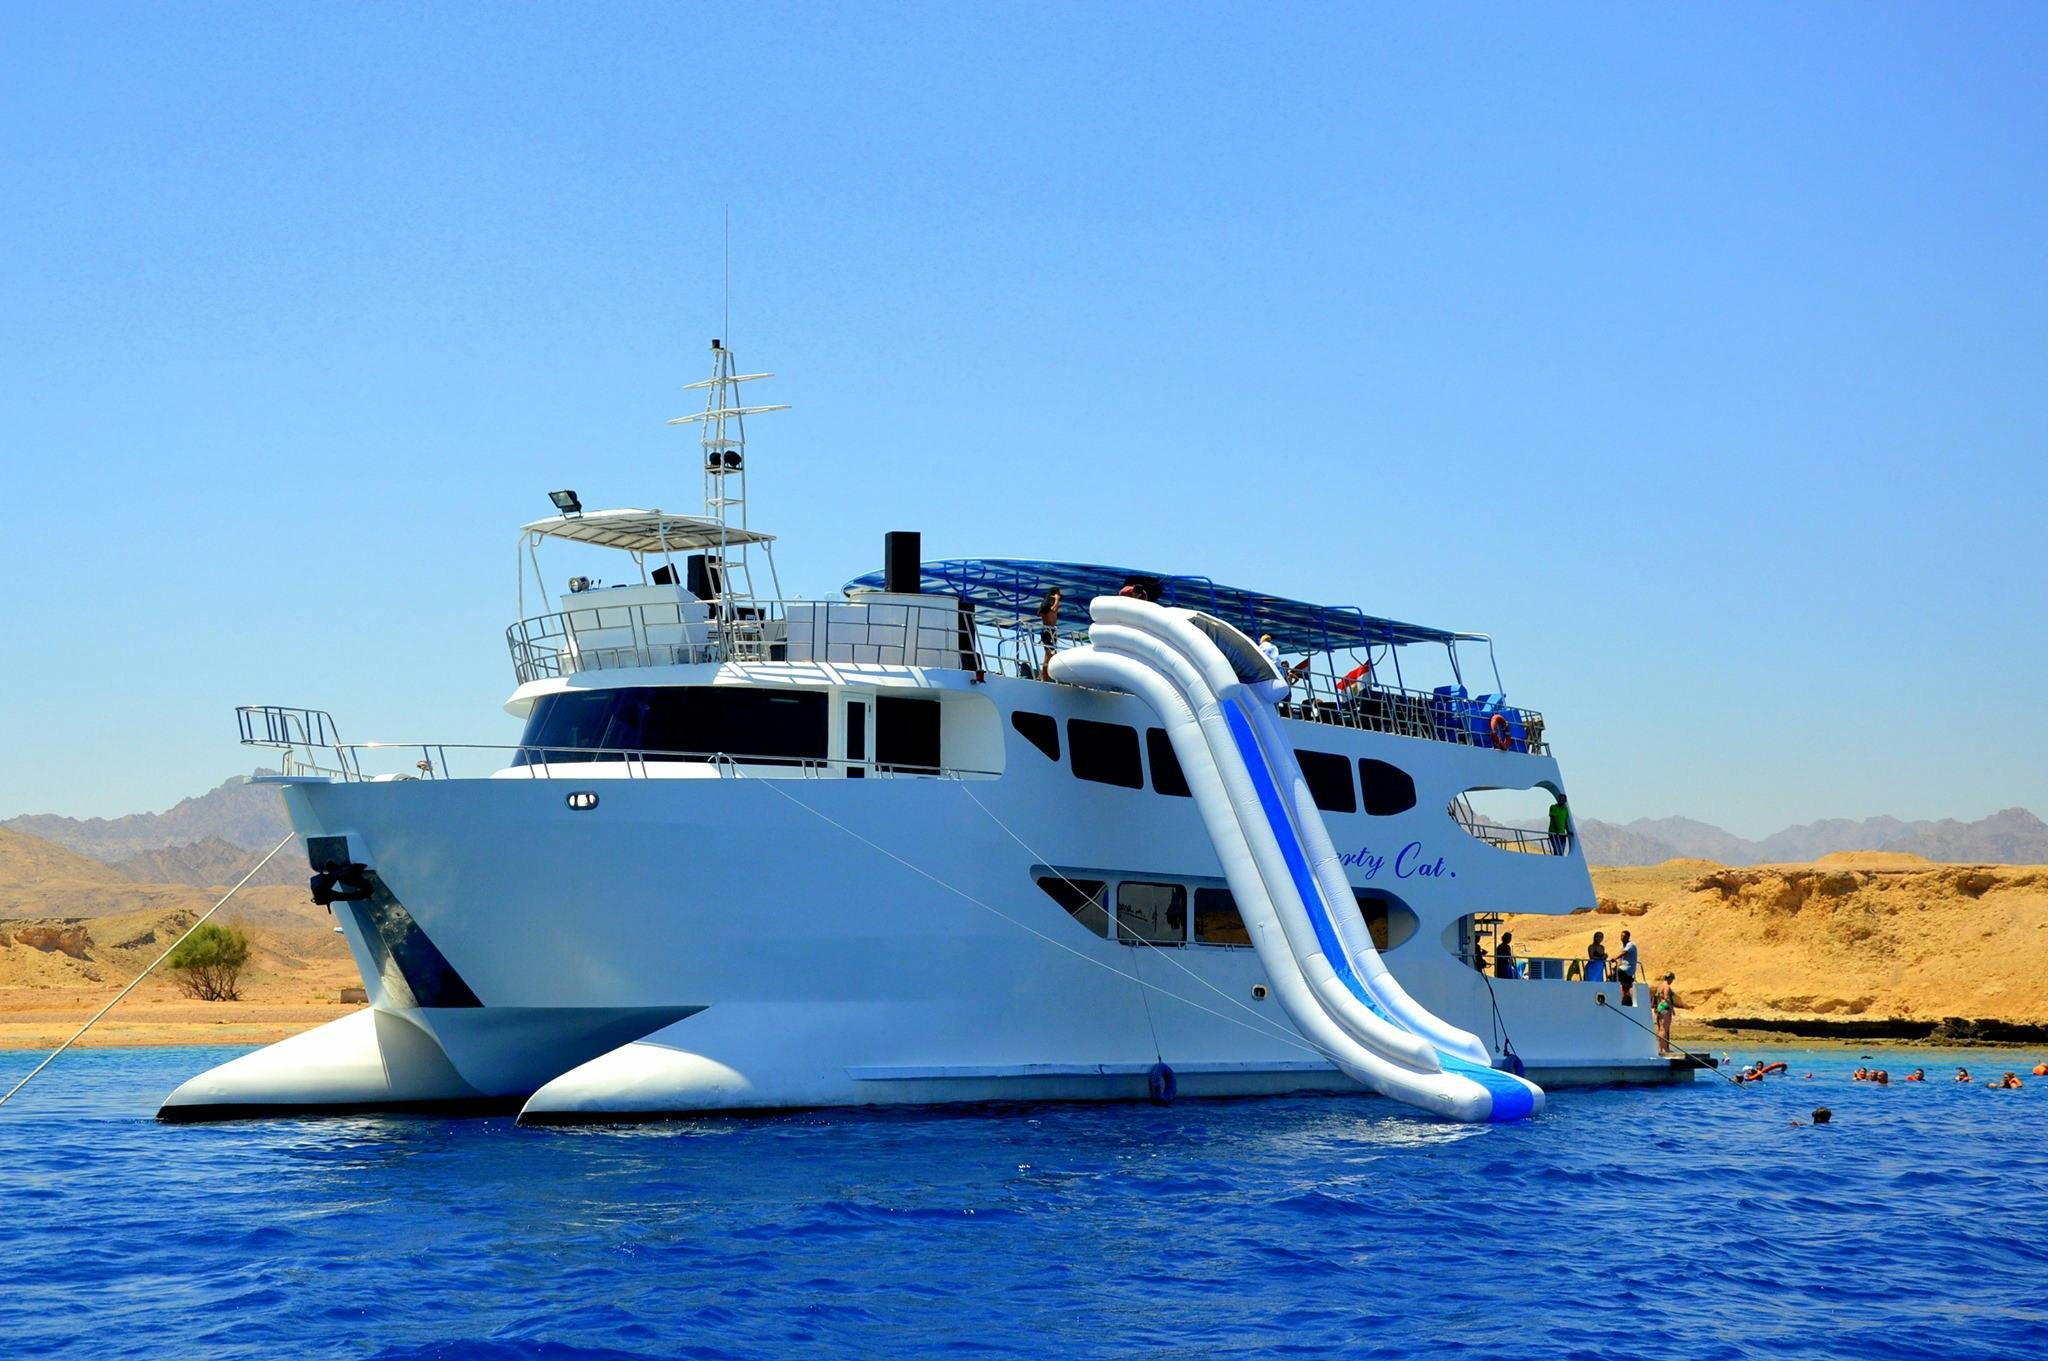 Seefahrt und U-Boot auf dem Liberty-Katamaran ab Sharm el-Sheikh